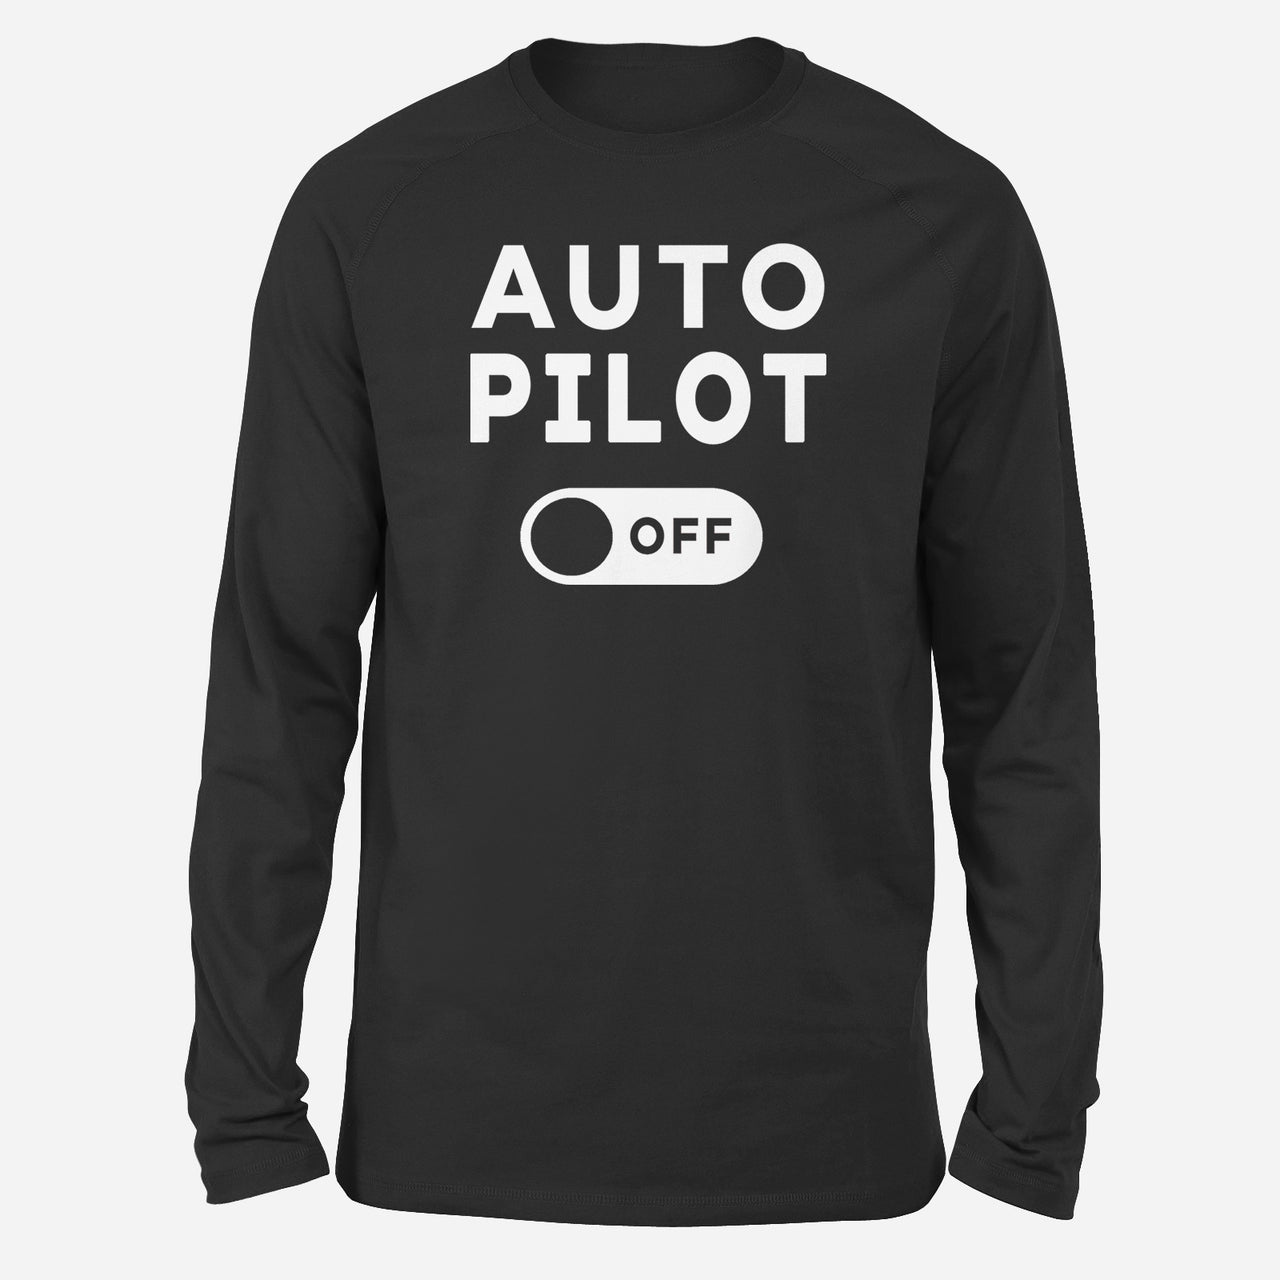 Auto Pilot Off Designed Long-Sleeve T-Shirts